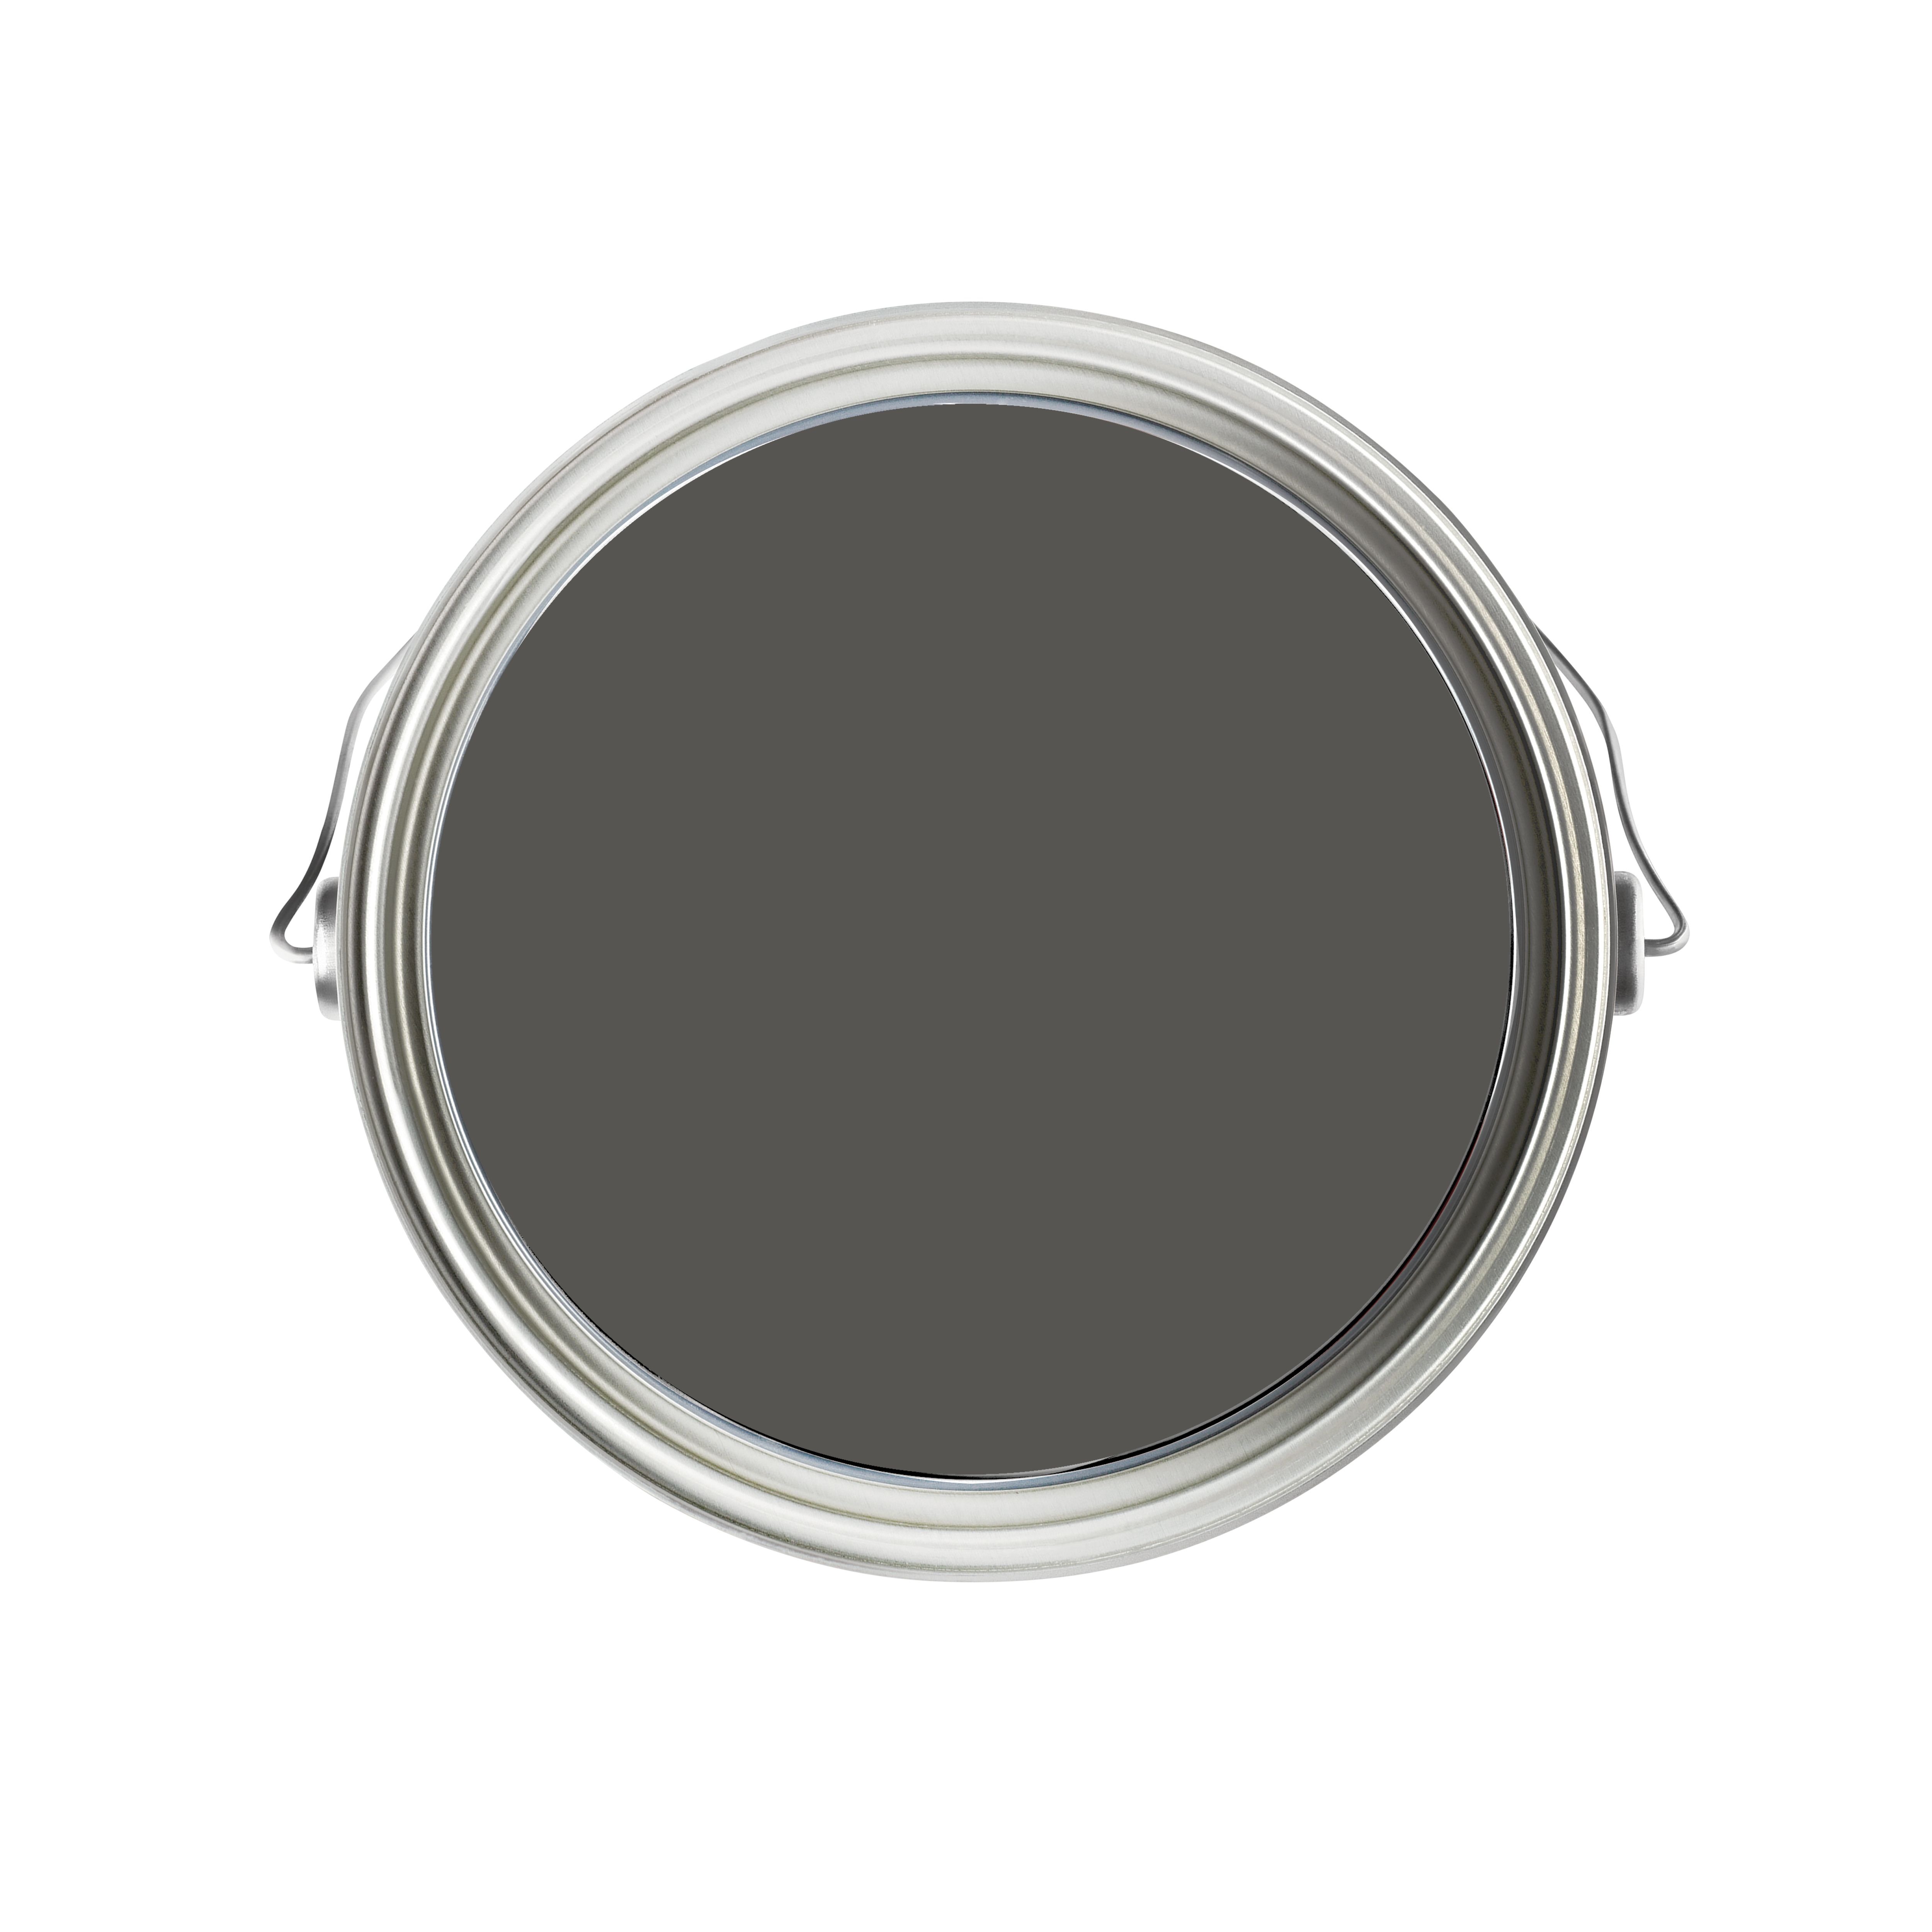 Fleetwood Elite Grey Vinyl matt Emulsion paint, 75ml Tester pot